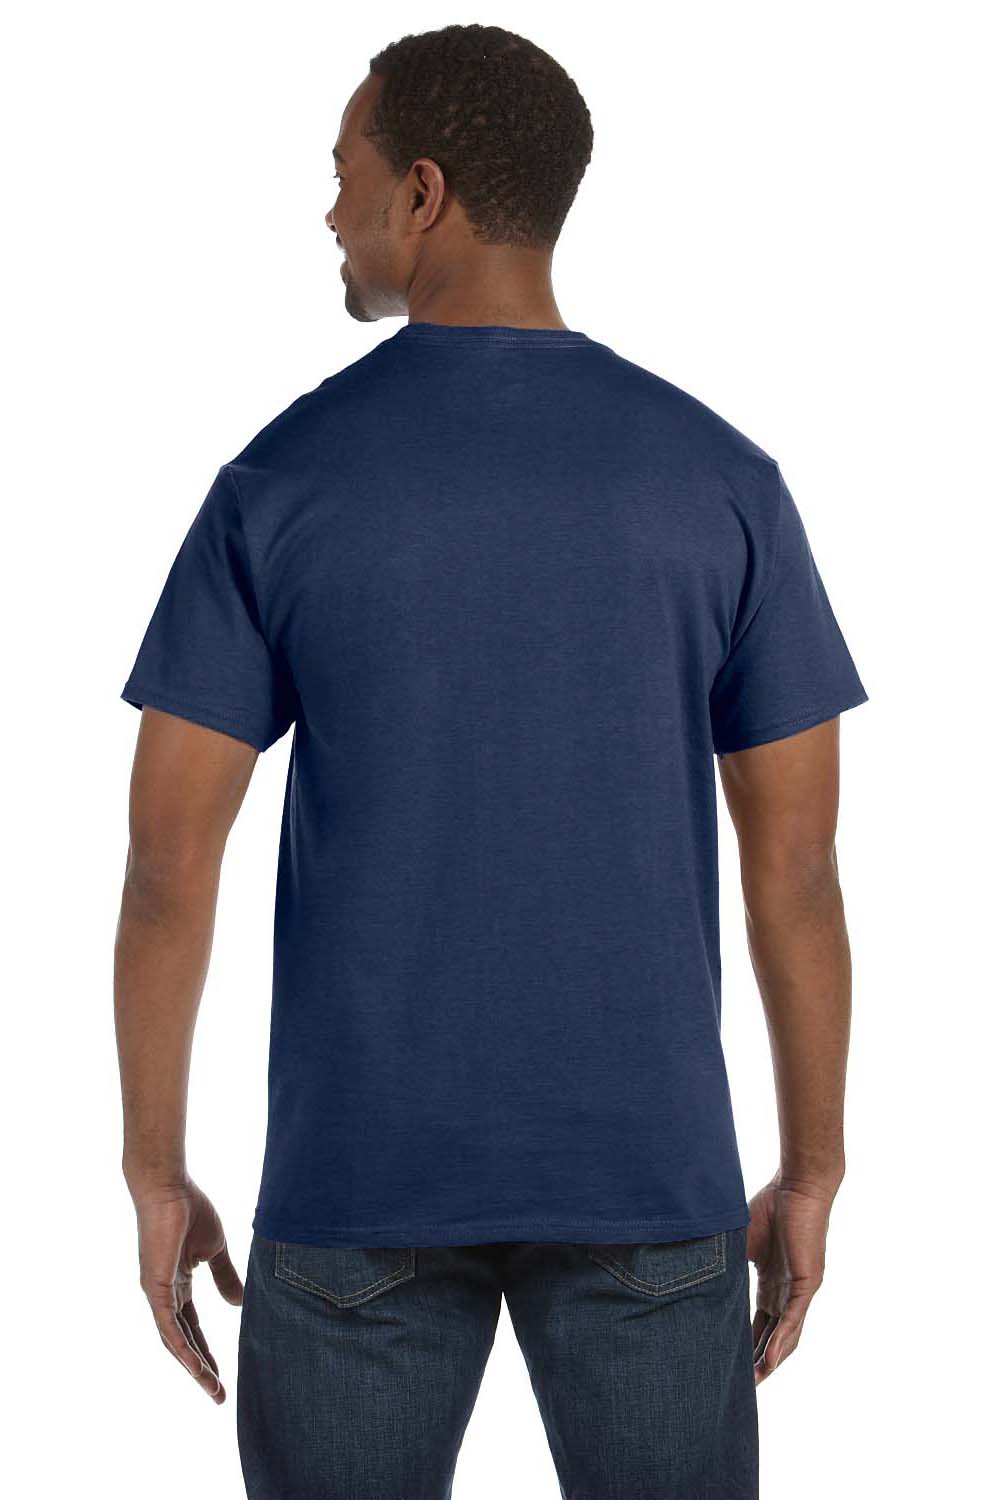 Jerzees 29M Mens Dri-Power Moisture Wicking Short Sleeve Crewneck T-Shirt Heather Navy Blue Back